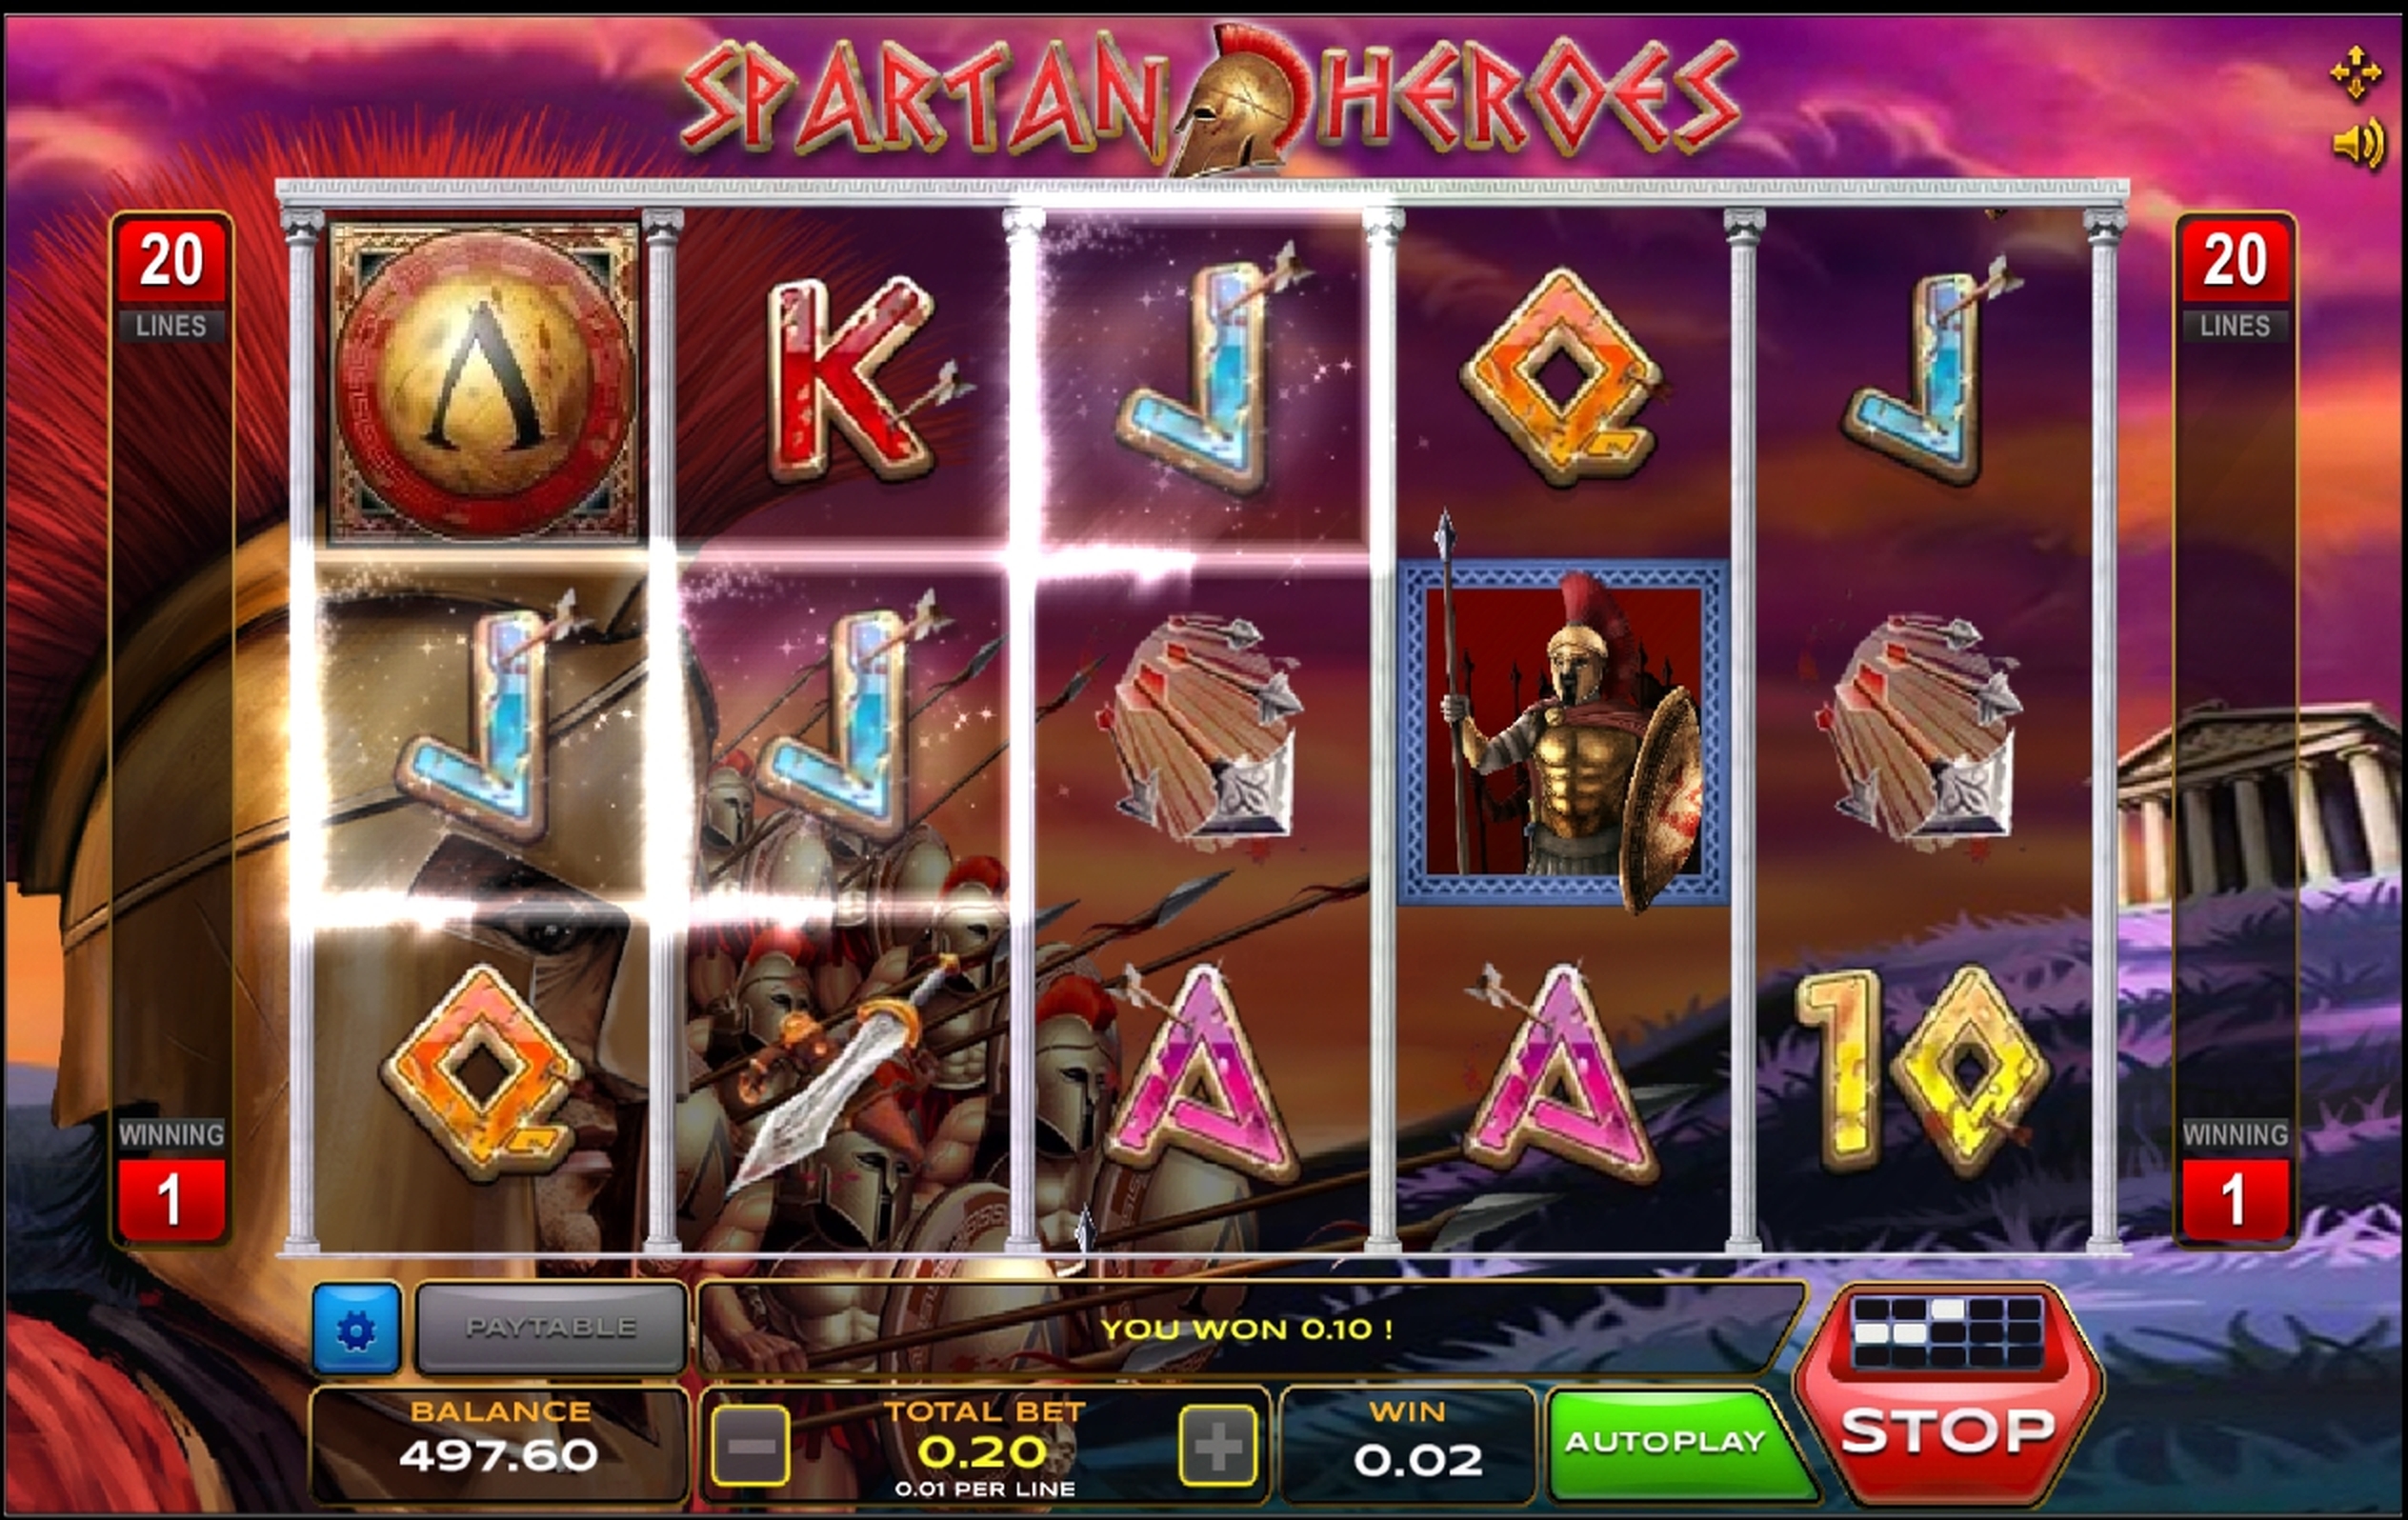 Win Money in Spartan Heroes Free Slot Game by Xplosive Slots Group